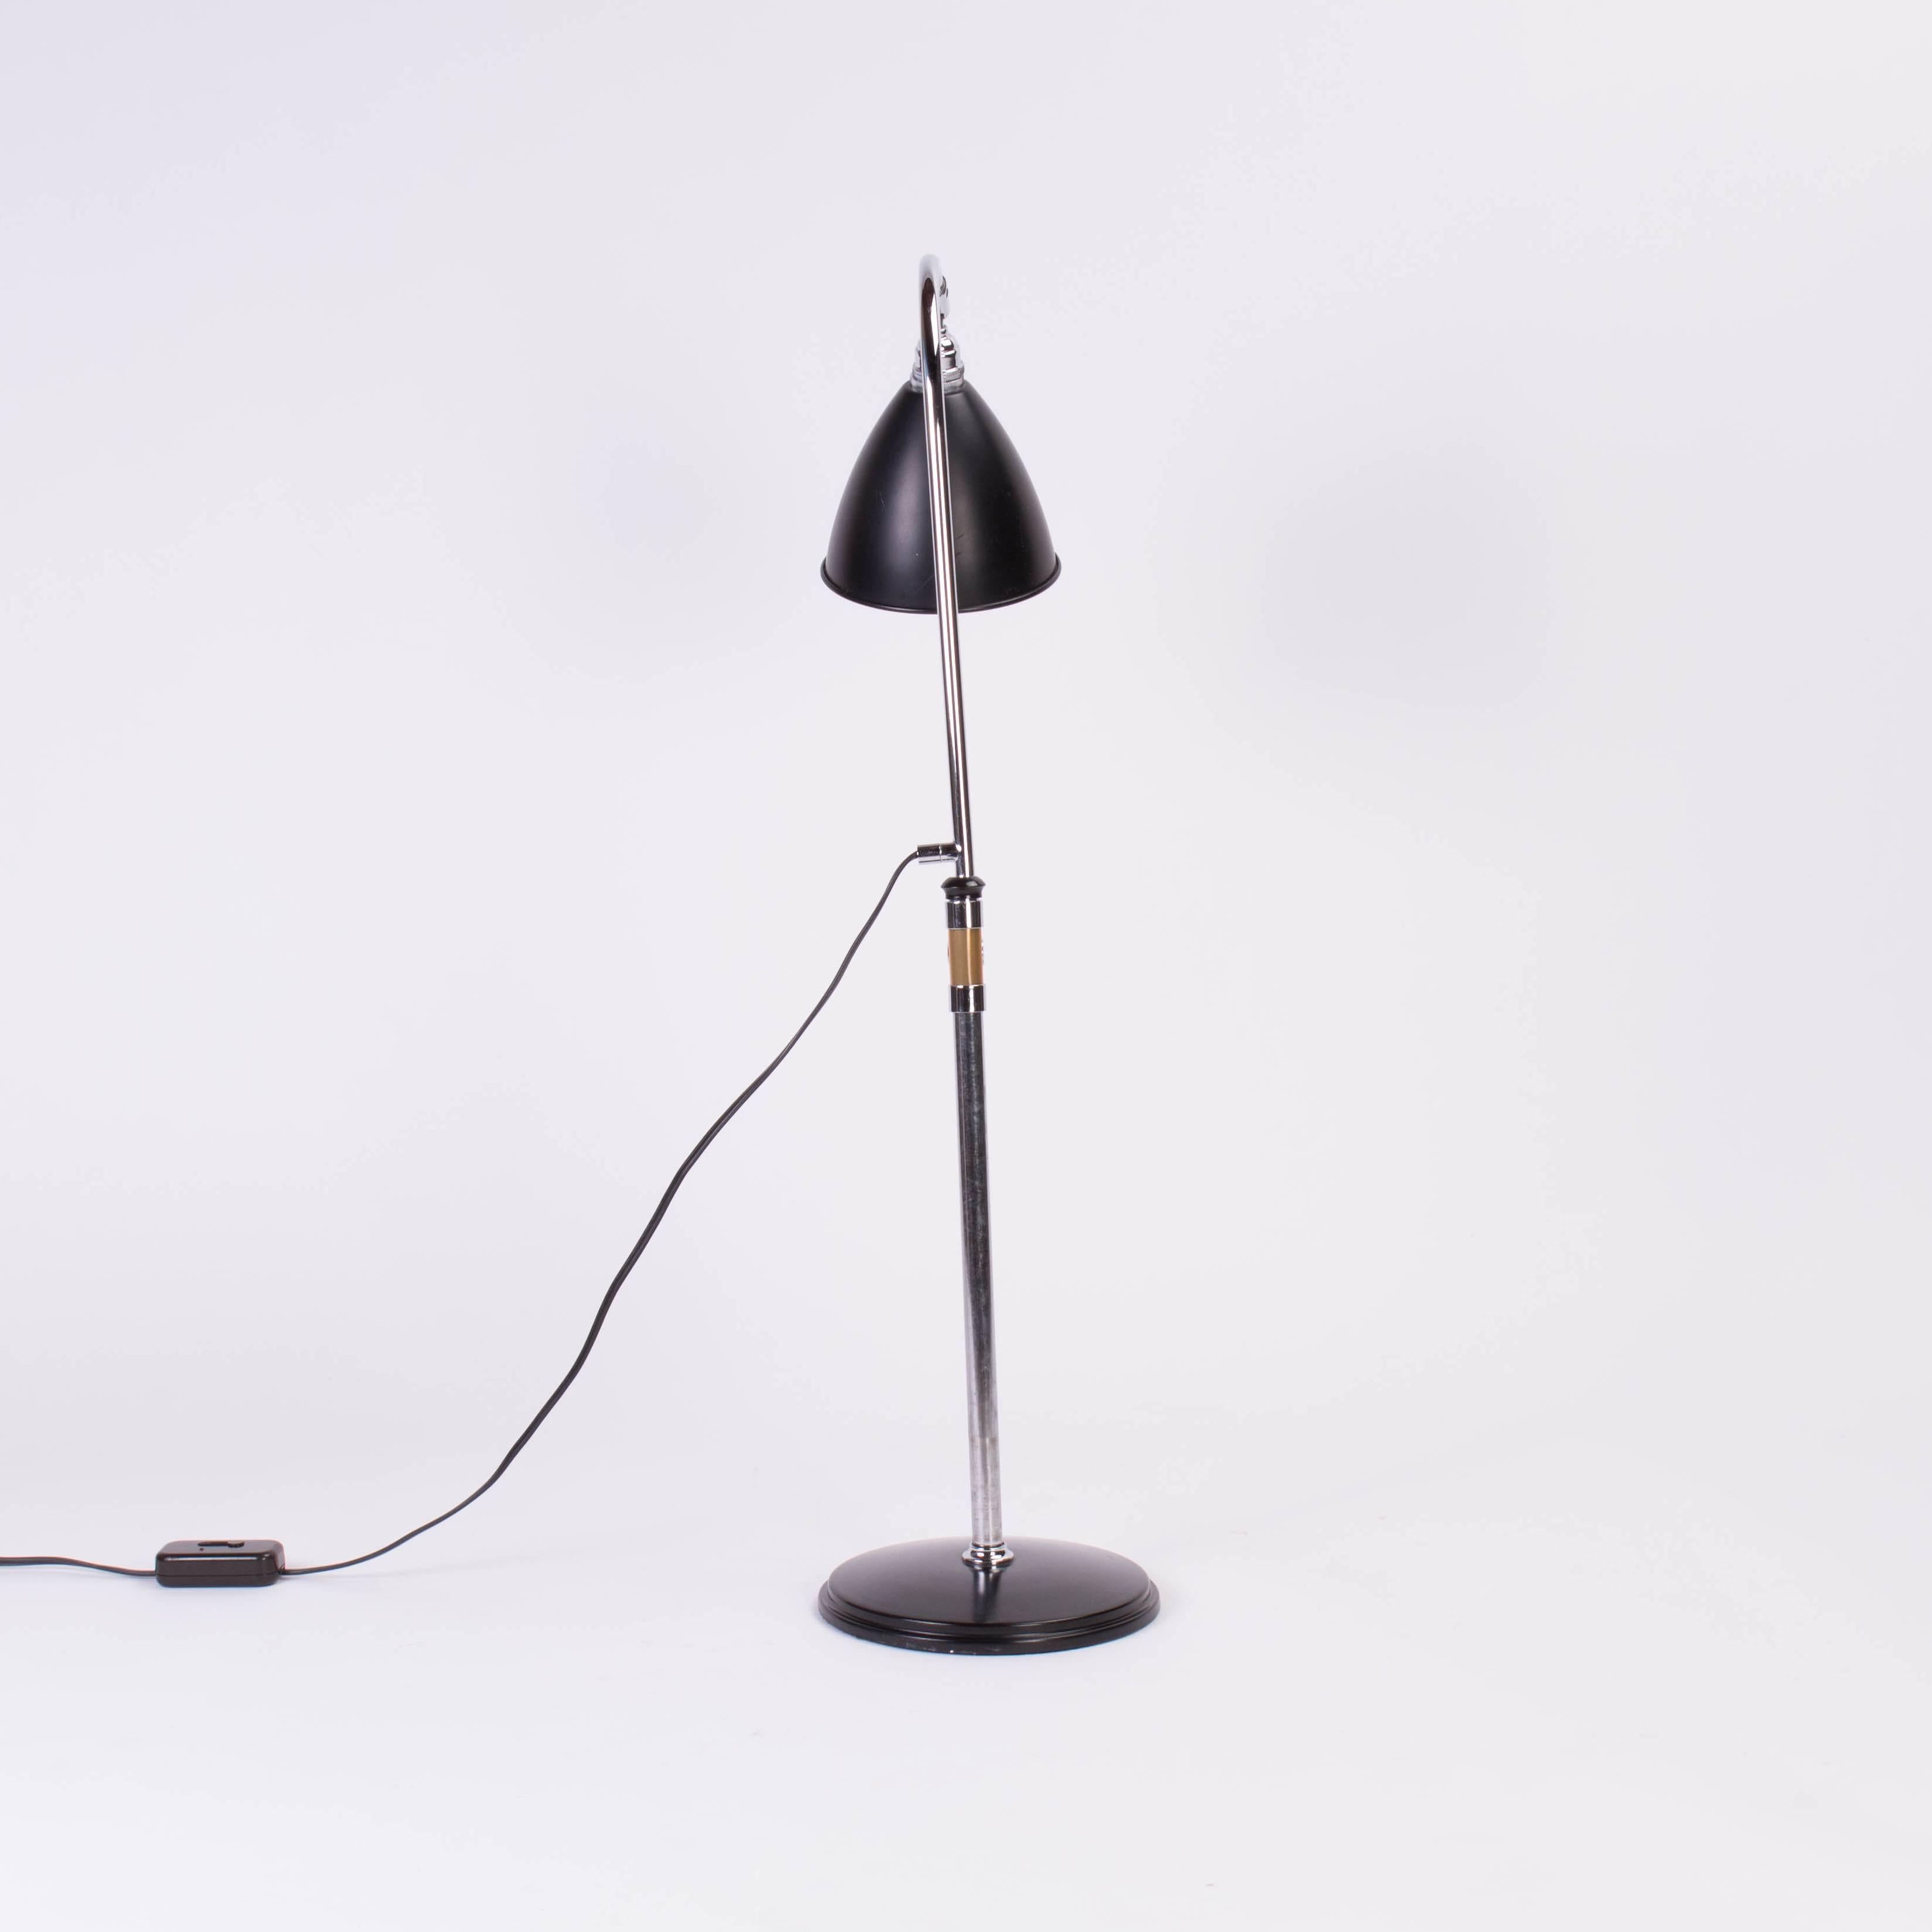 American Industrial Style Desk Lamp